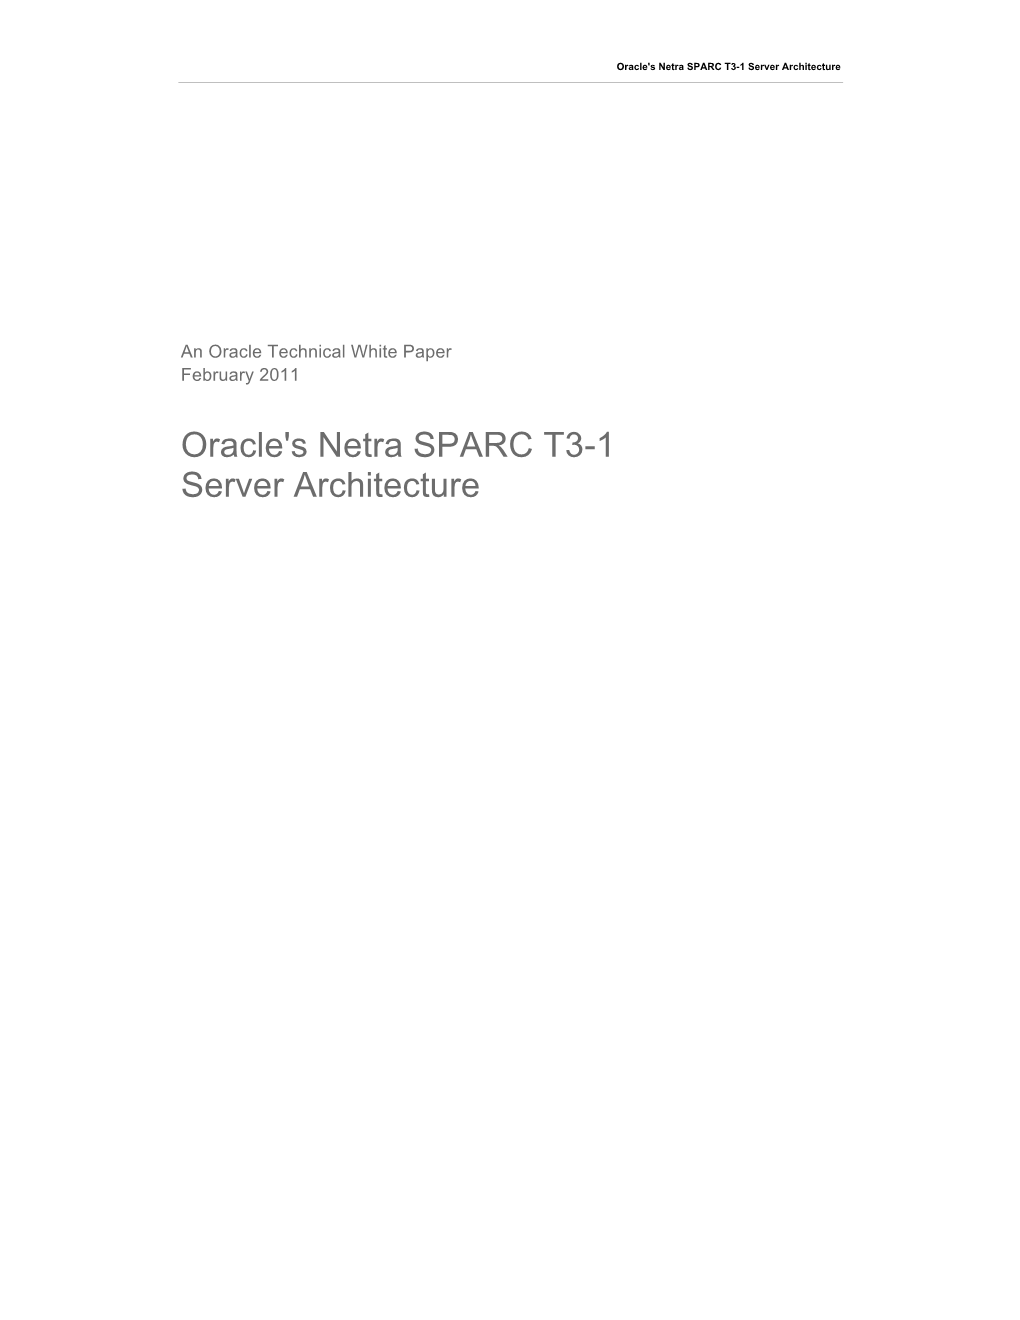 Oracle's Sun Netra SPARC T3-1 Server Architecture